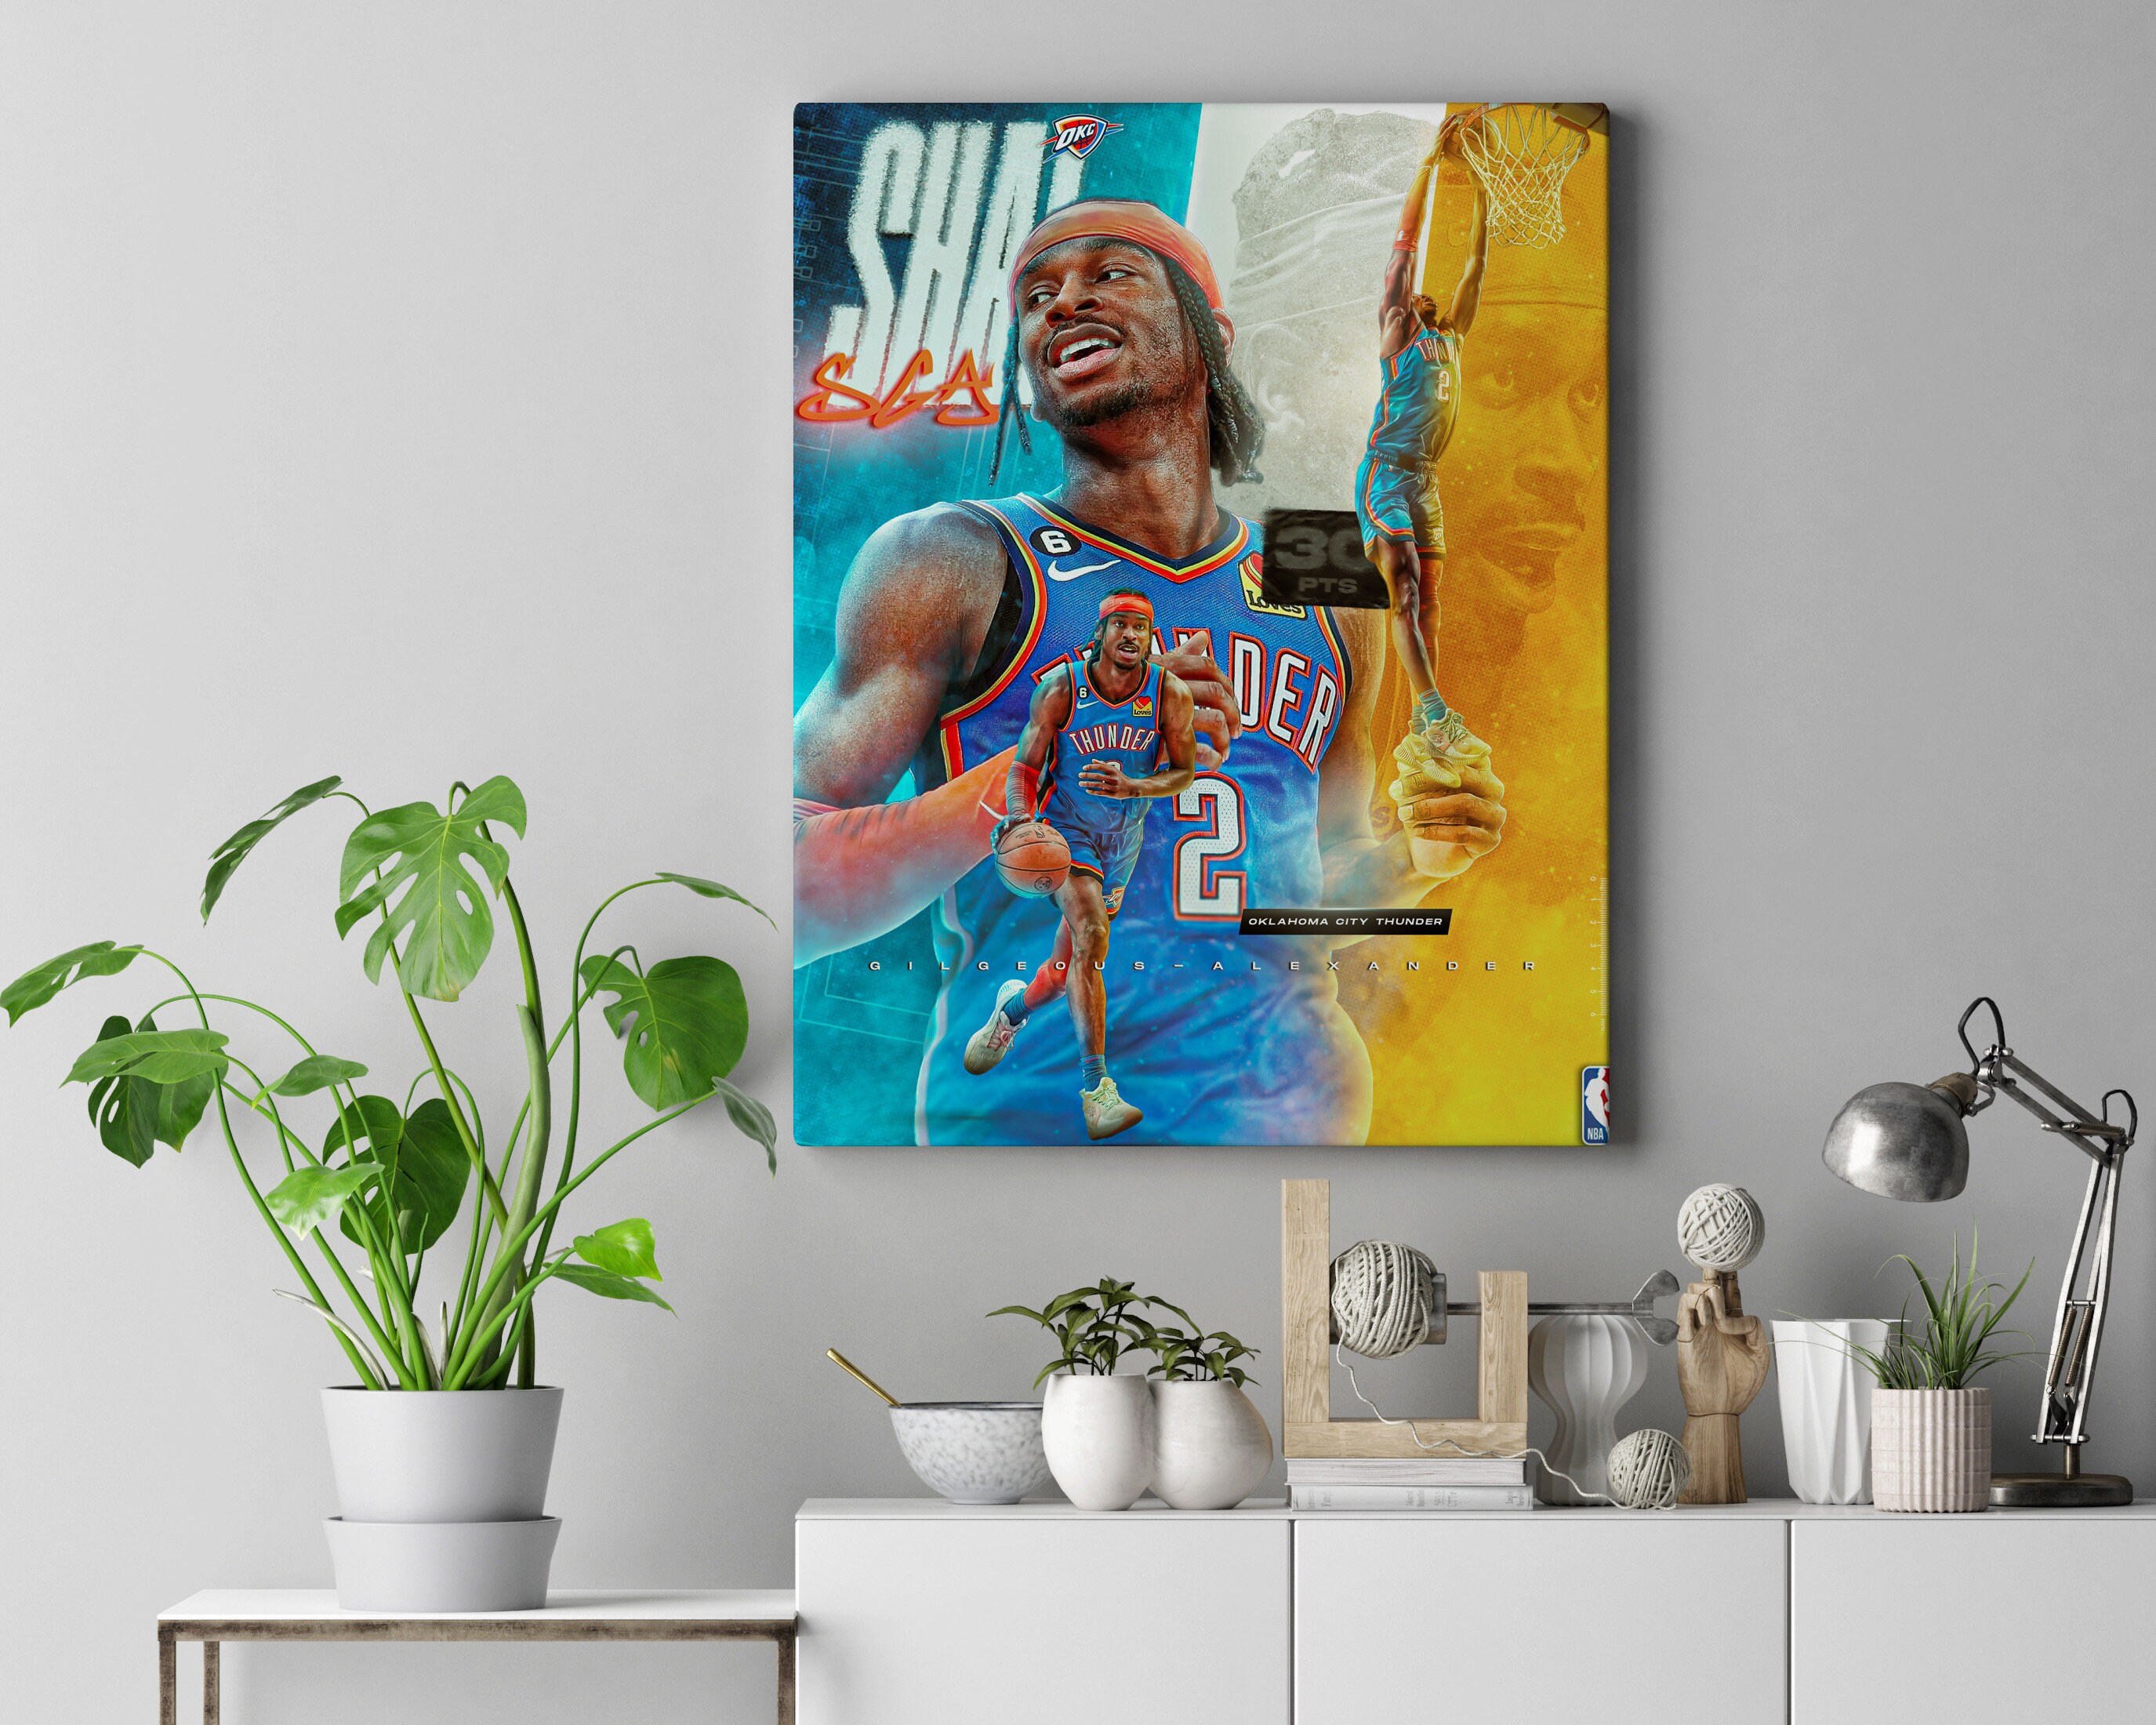 ✺Framed✺ OKC THUNDER NBA Basketball Poster SHAI GILGEOUS